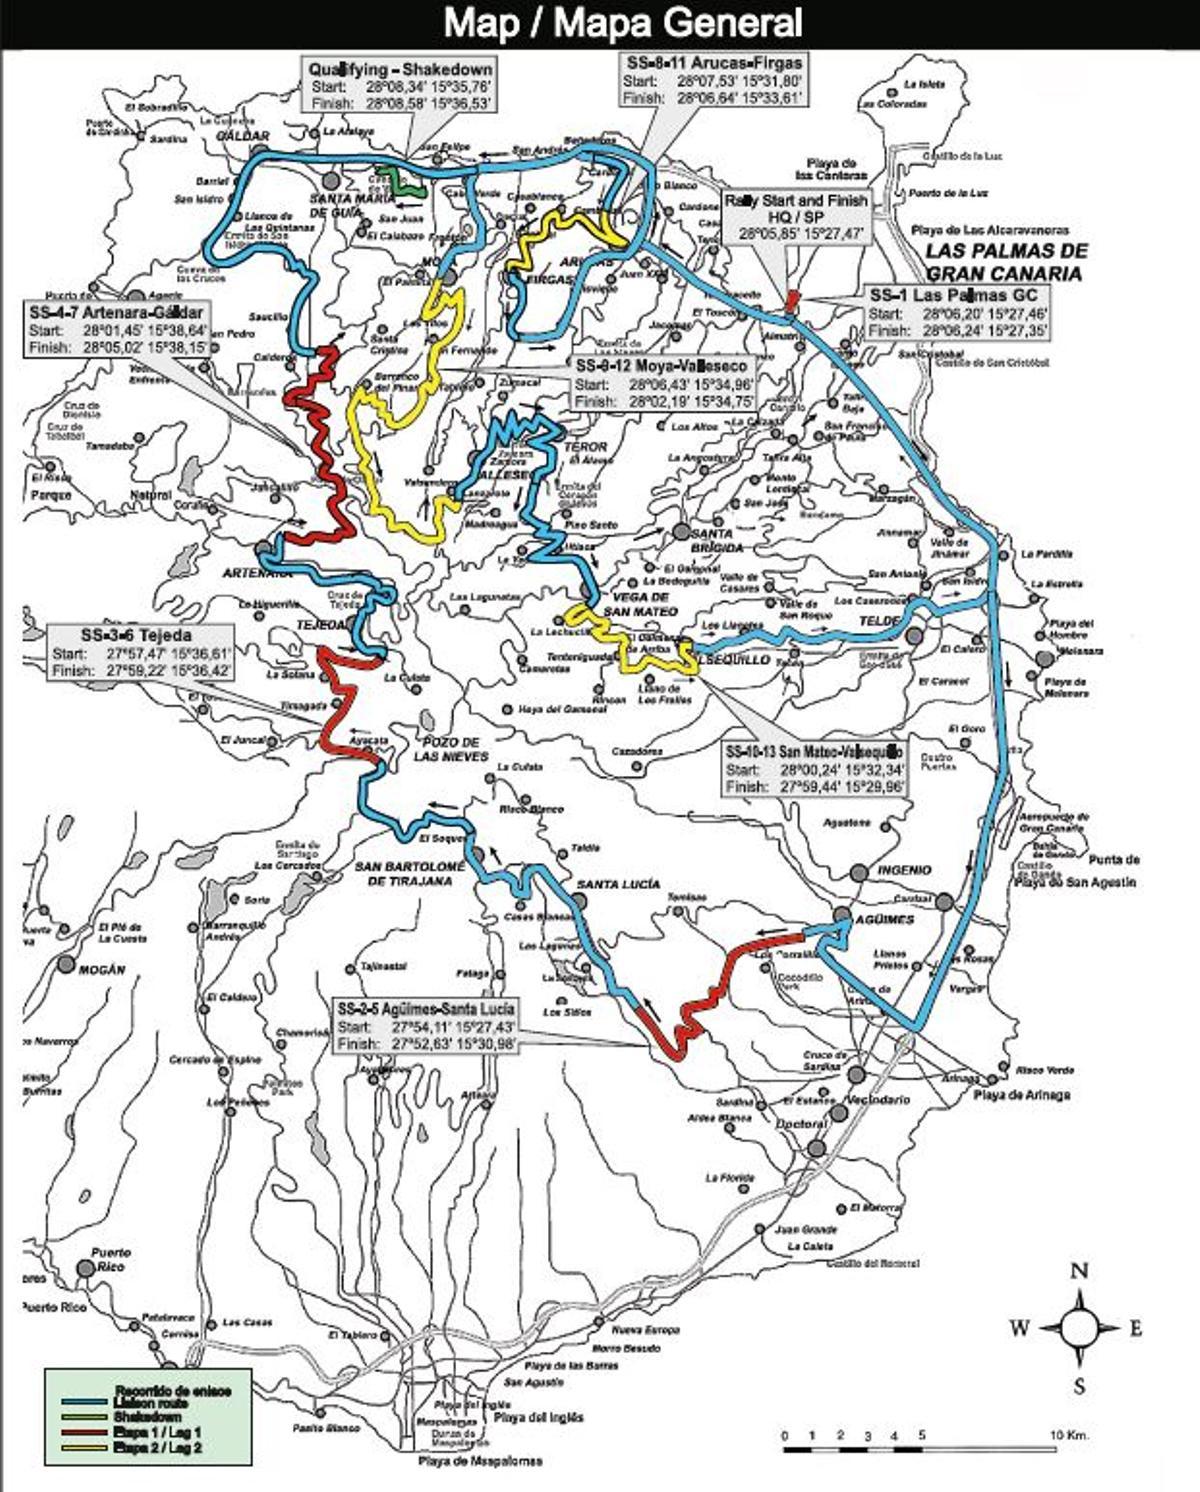 Mapa del recorrido